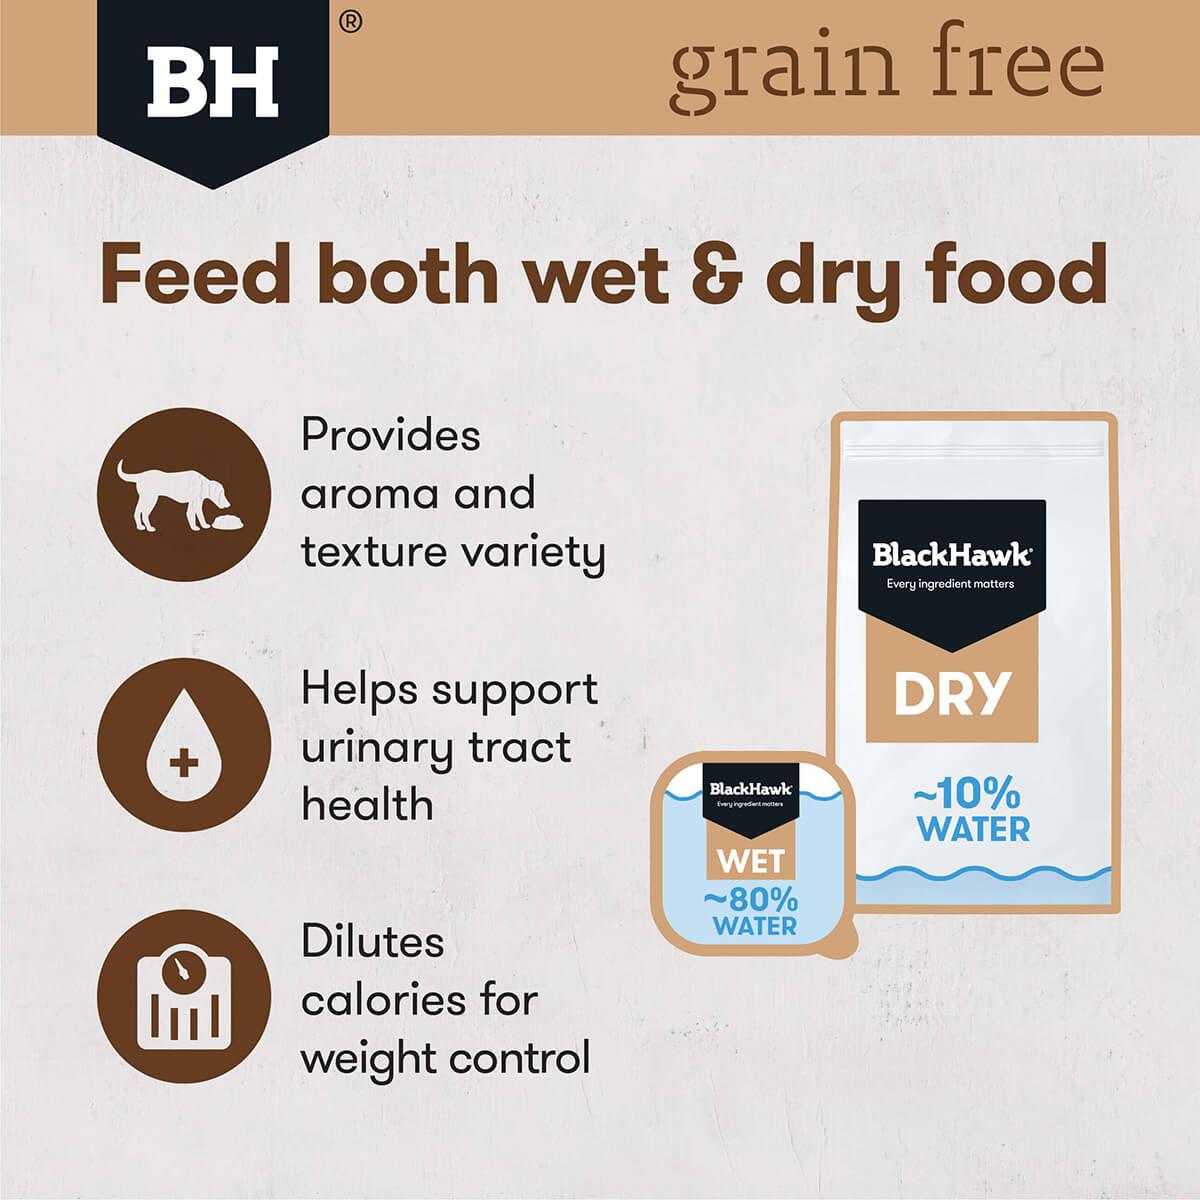 Black Hawk Grain Free Adult Beef Wet Dog Food